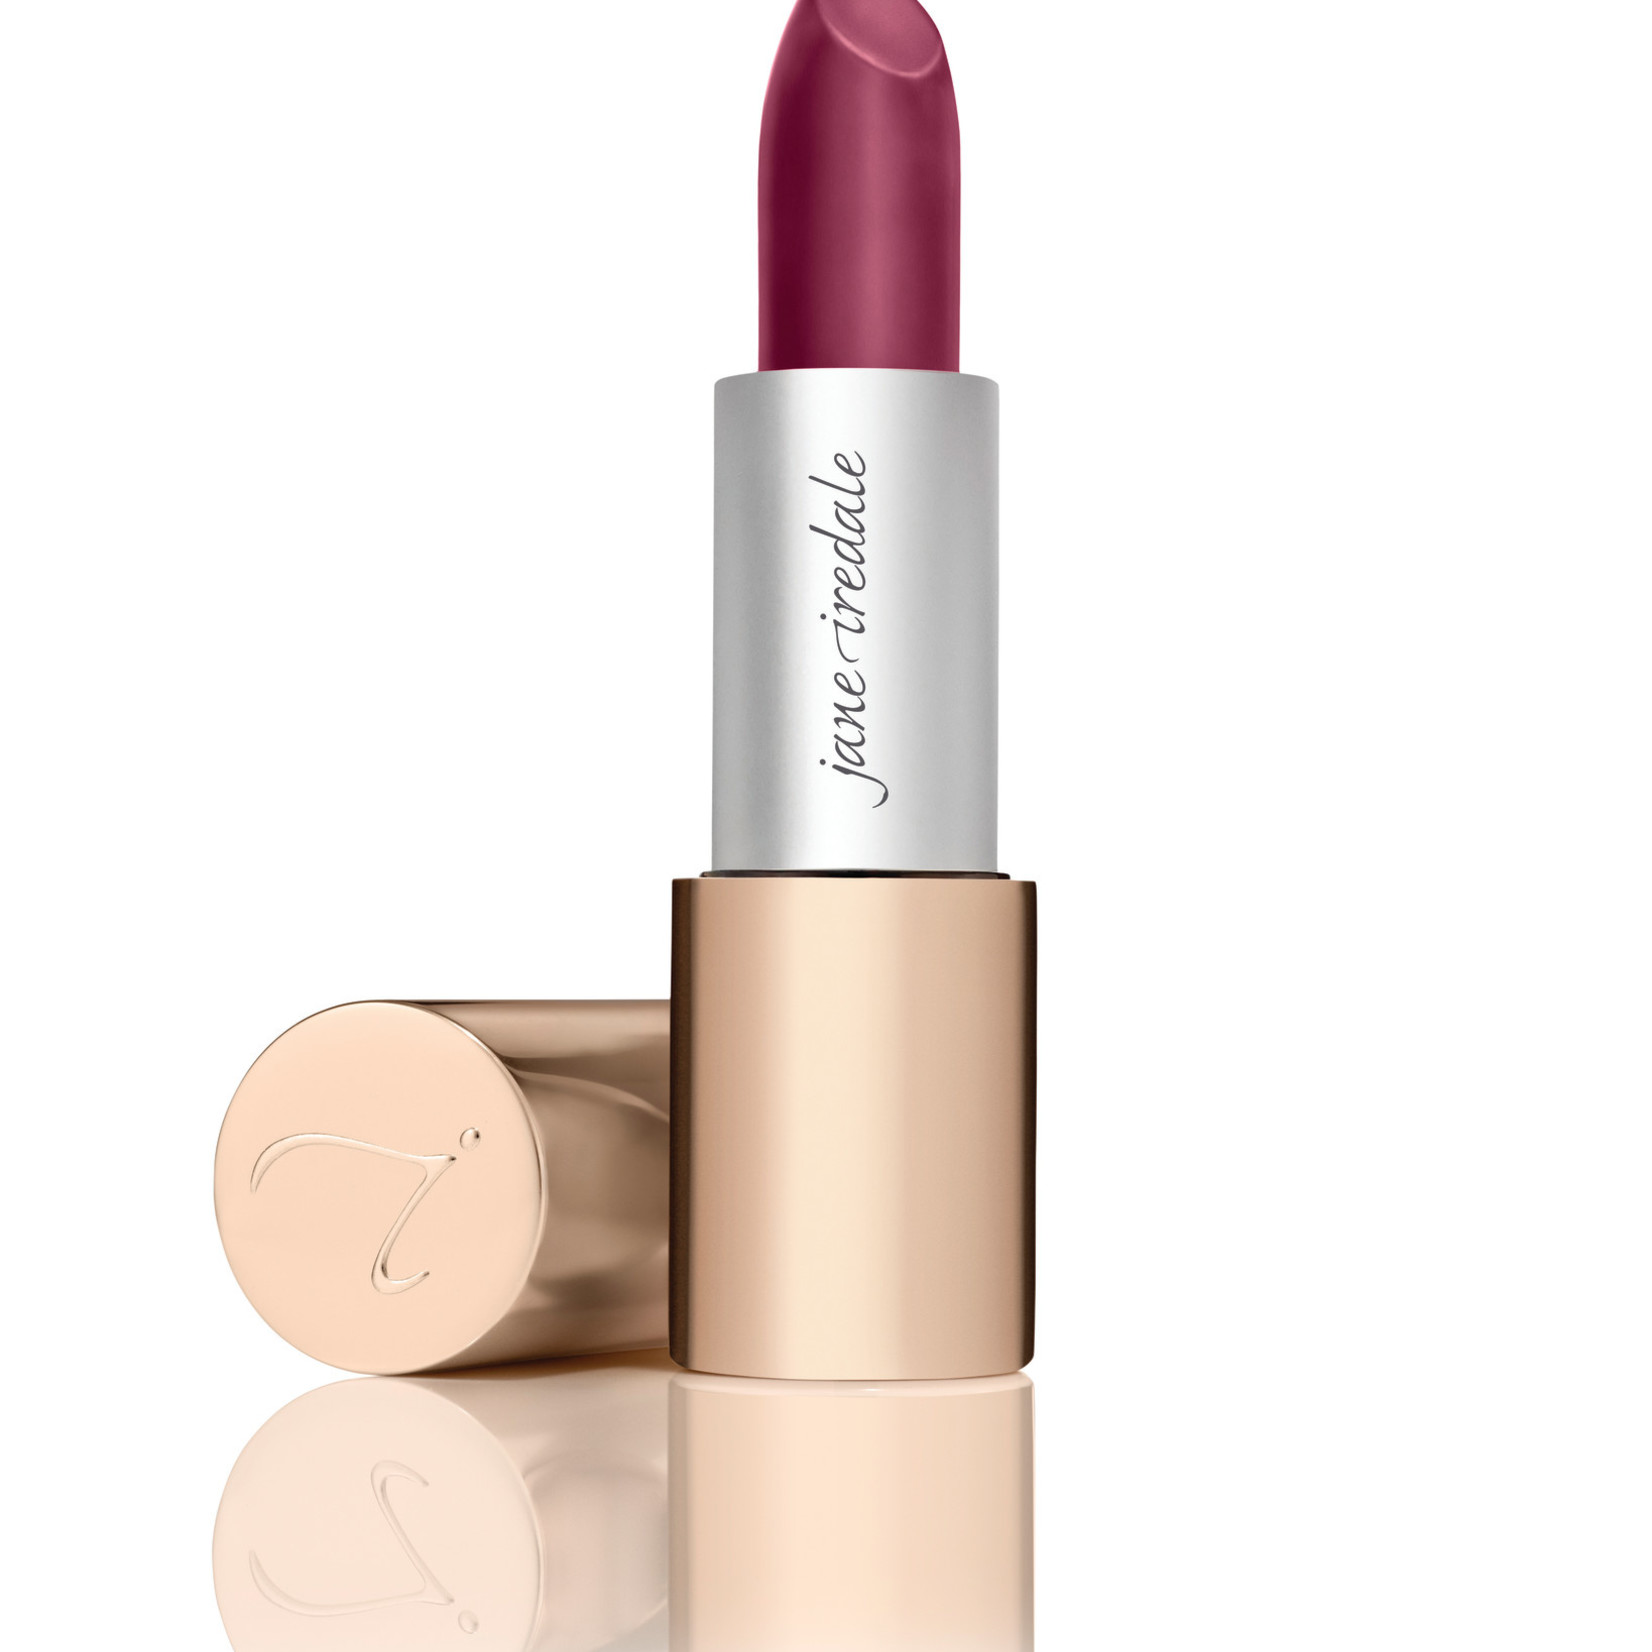 Jane Iredale Triple Luxe Long Lasting Naturally Moist Lipstick™